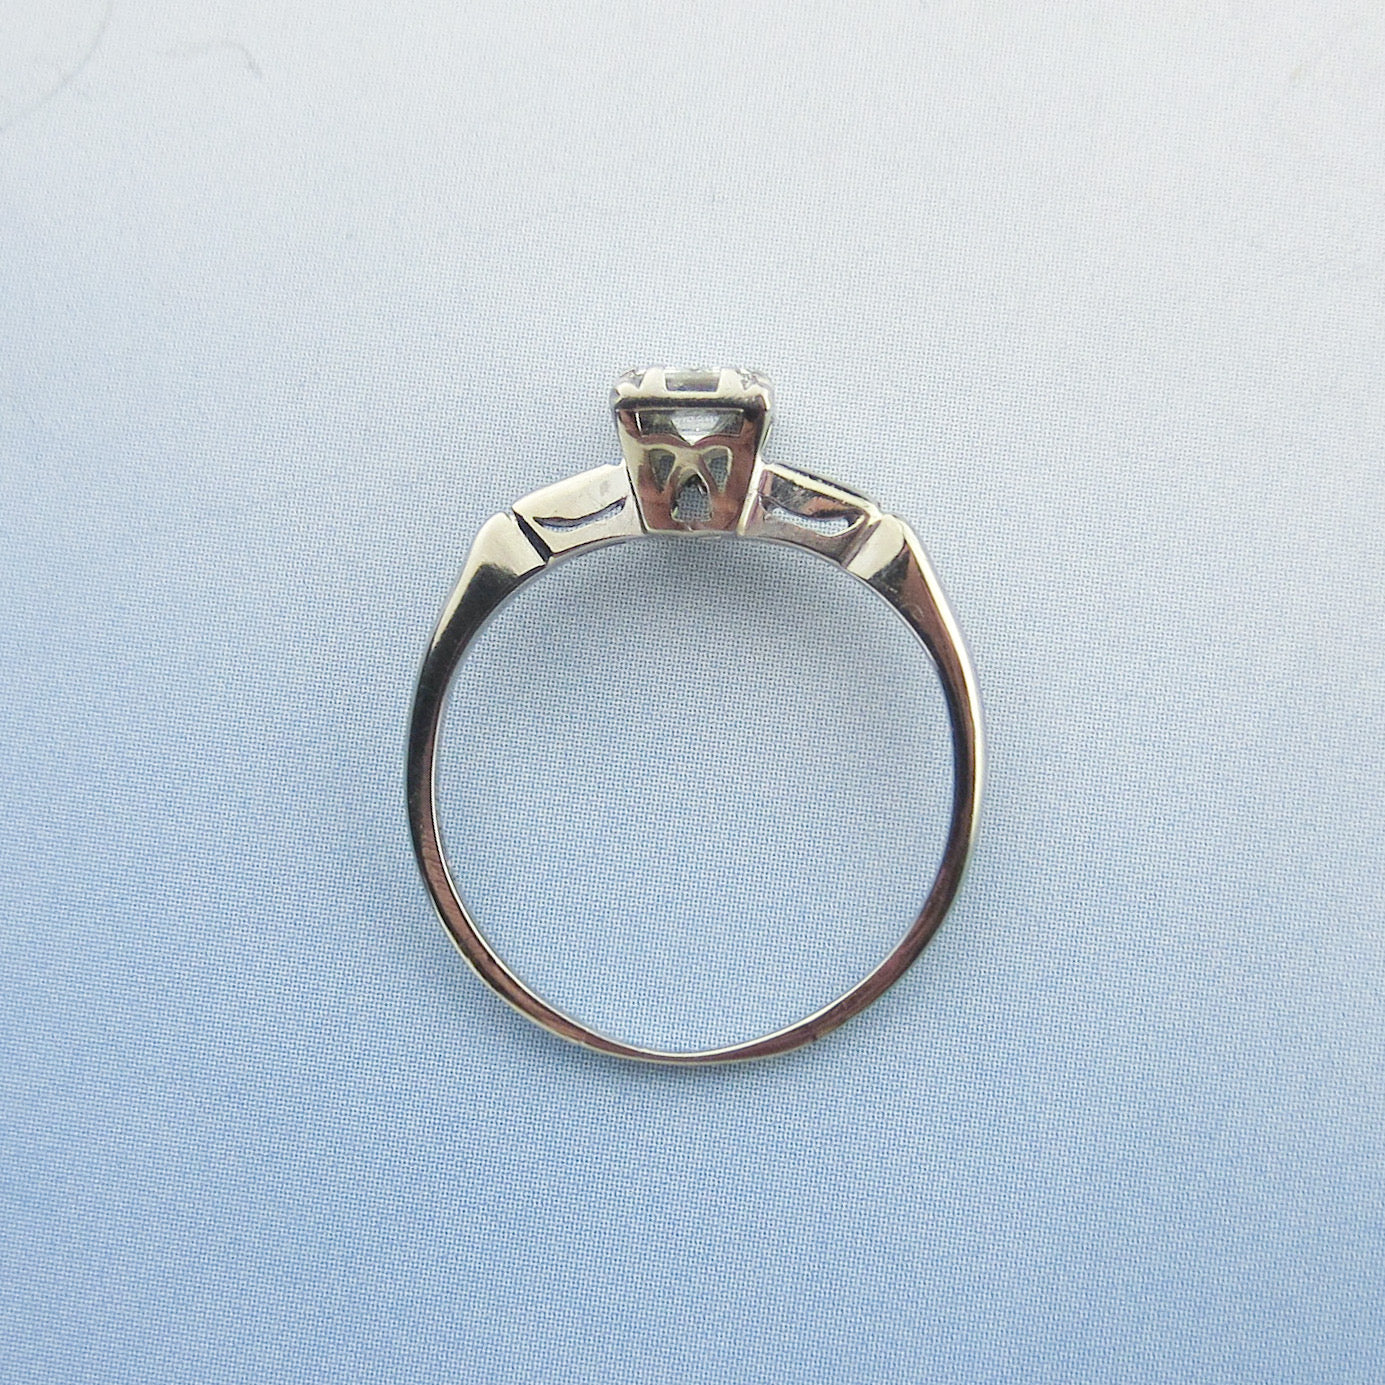 SOLD--Vintage Emerald Cut .62 FGVS2 Diamond Engagement Ring Plat/14k c. 1940